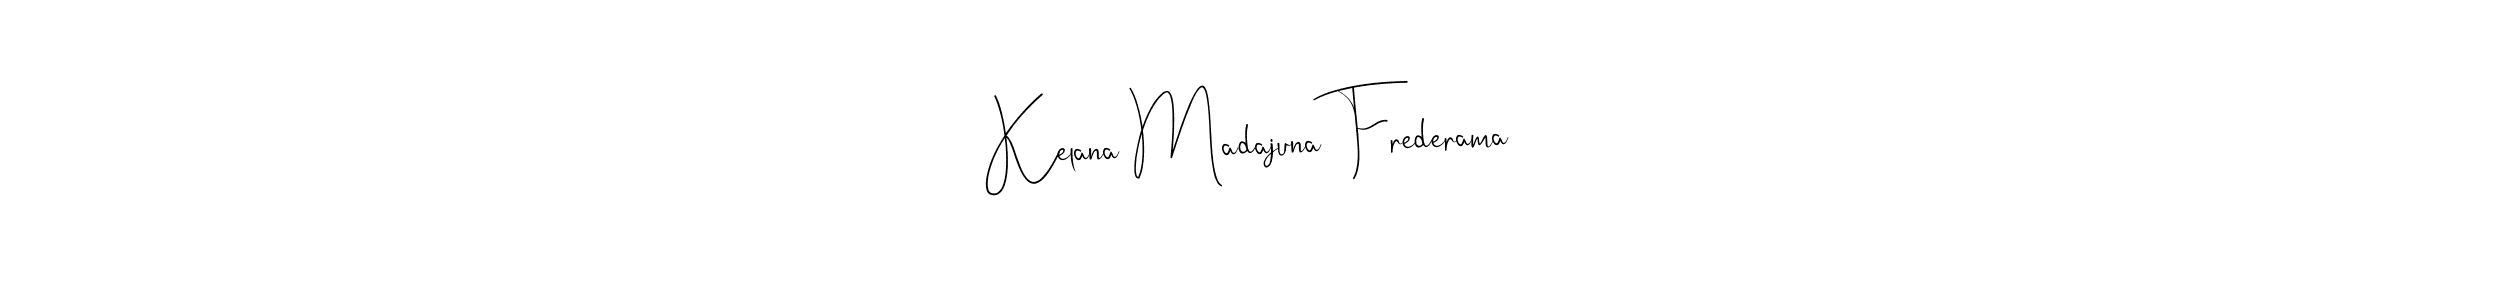 Use a signature maker to create a handwritten signature online. With this signature software, you can design (Andilay-7BmLP) your own signature for name Kelana Madajuna Frederama. Kelana Madajuna Frederama signature style 4 images and pictures png